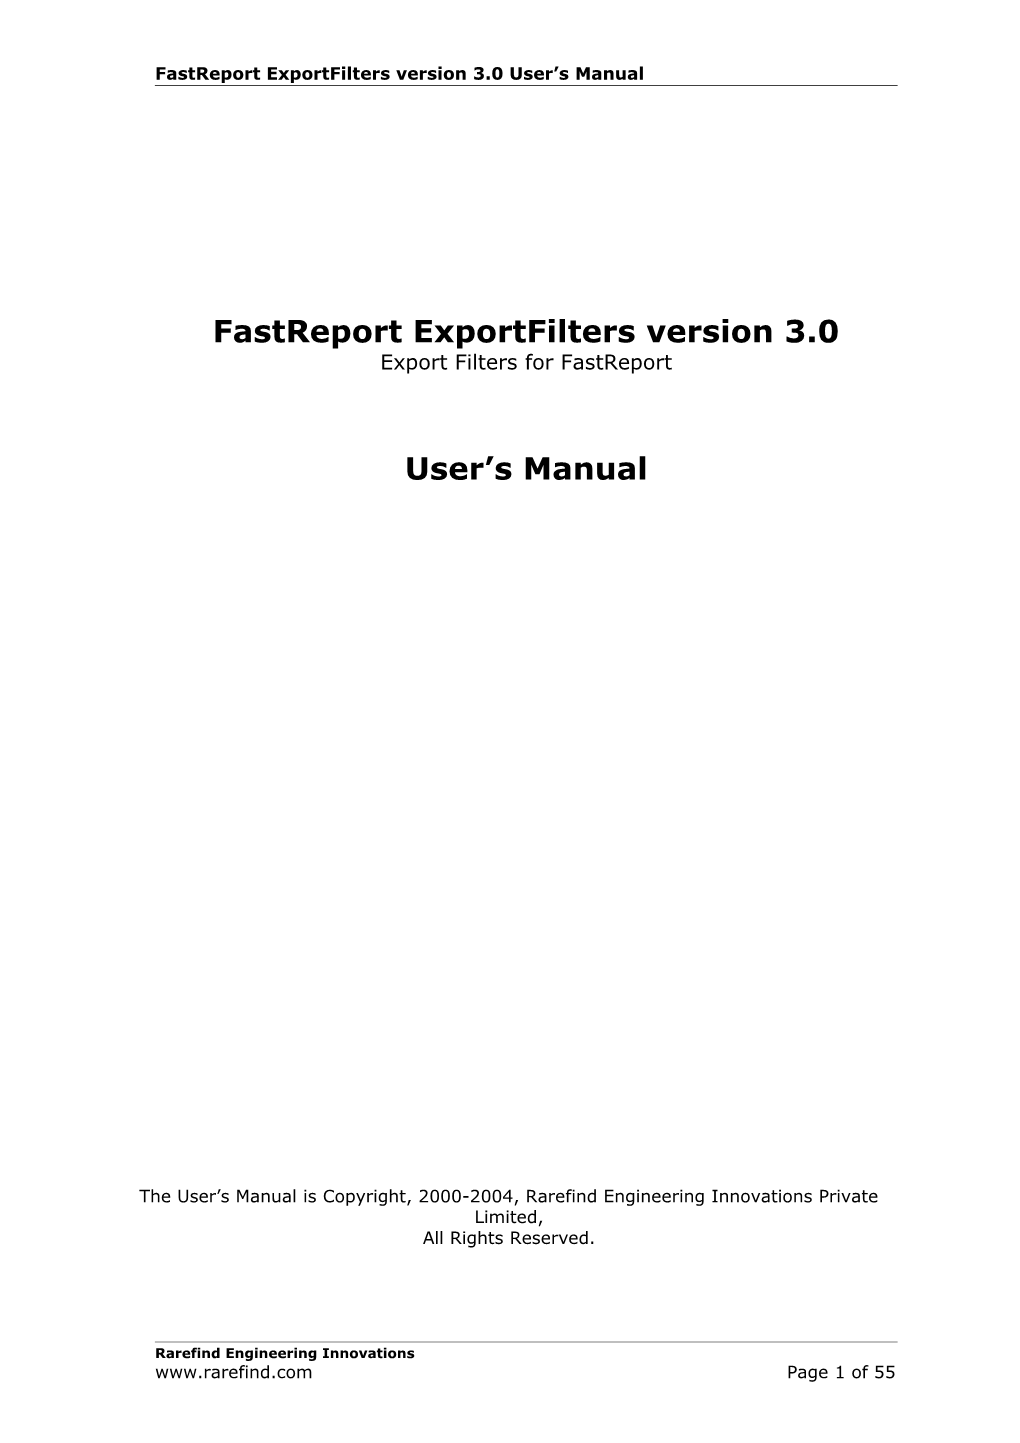 Fastreport Exportfilters User Manual